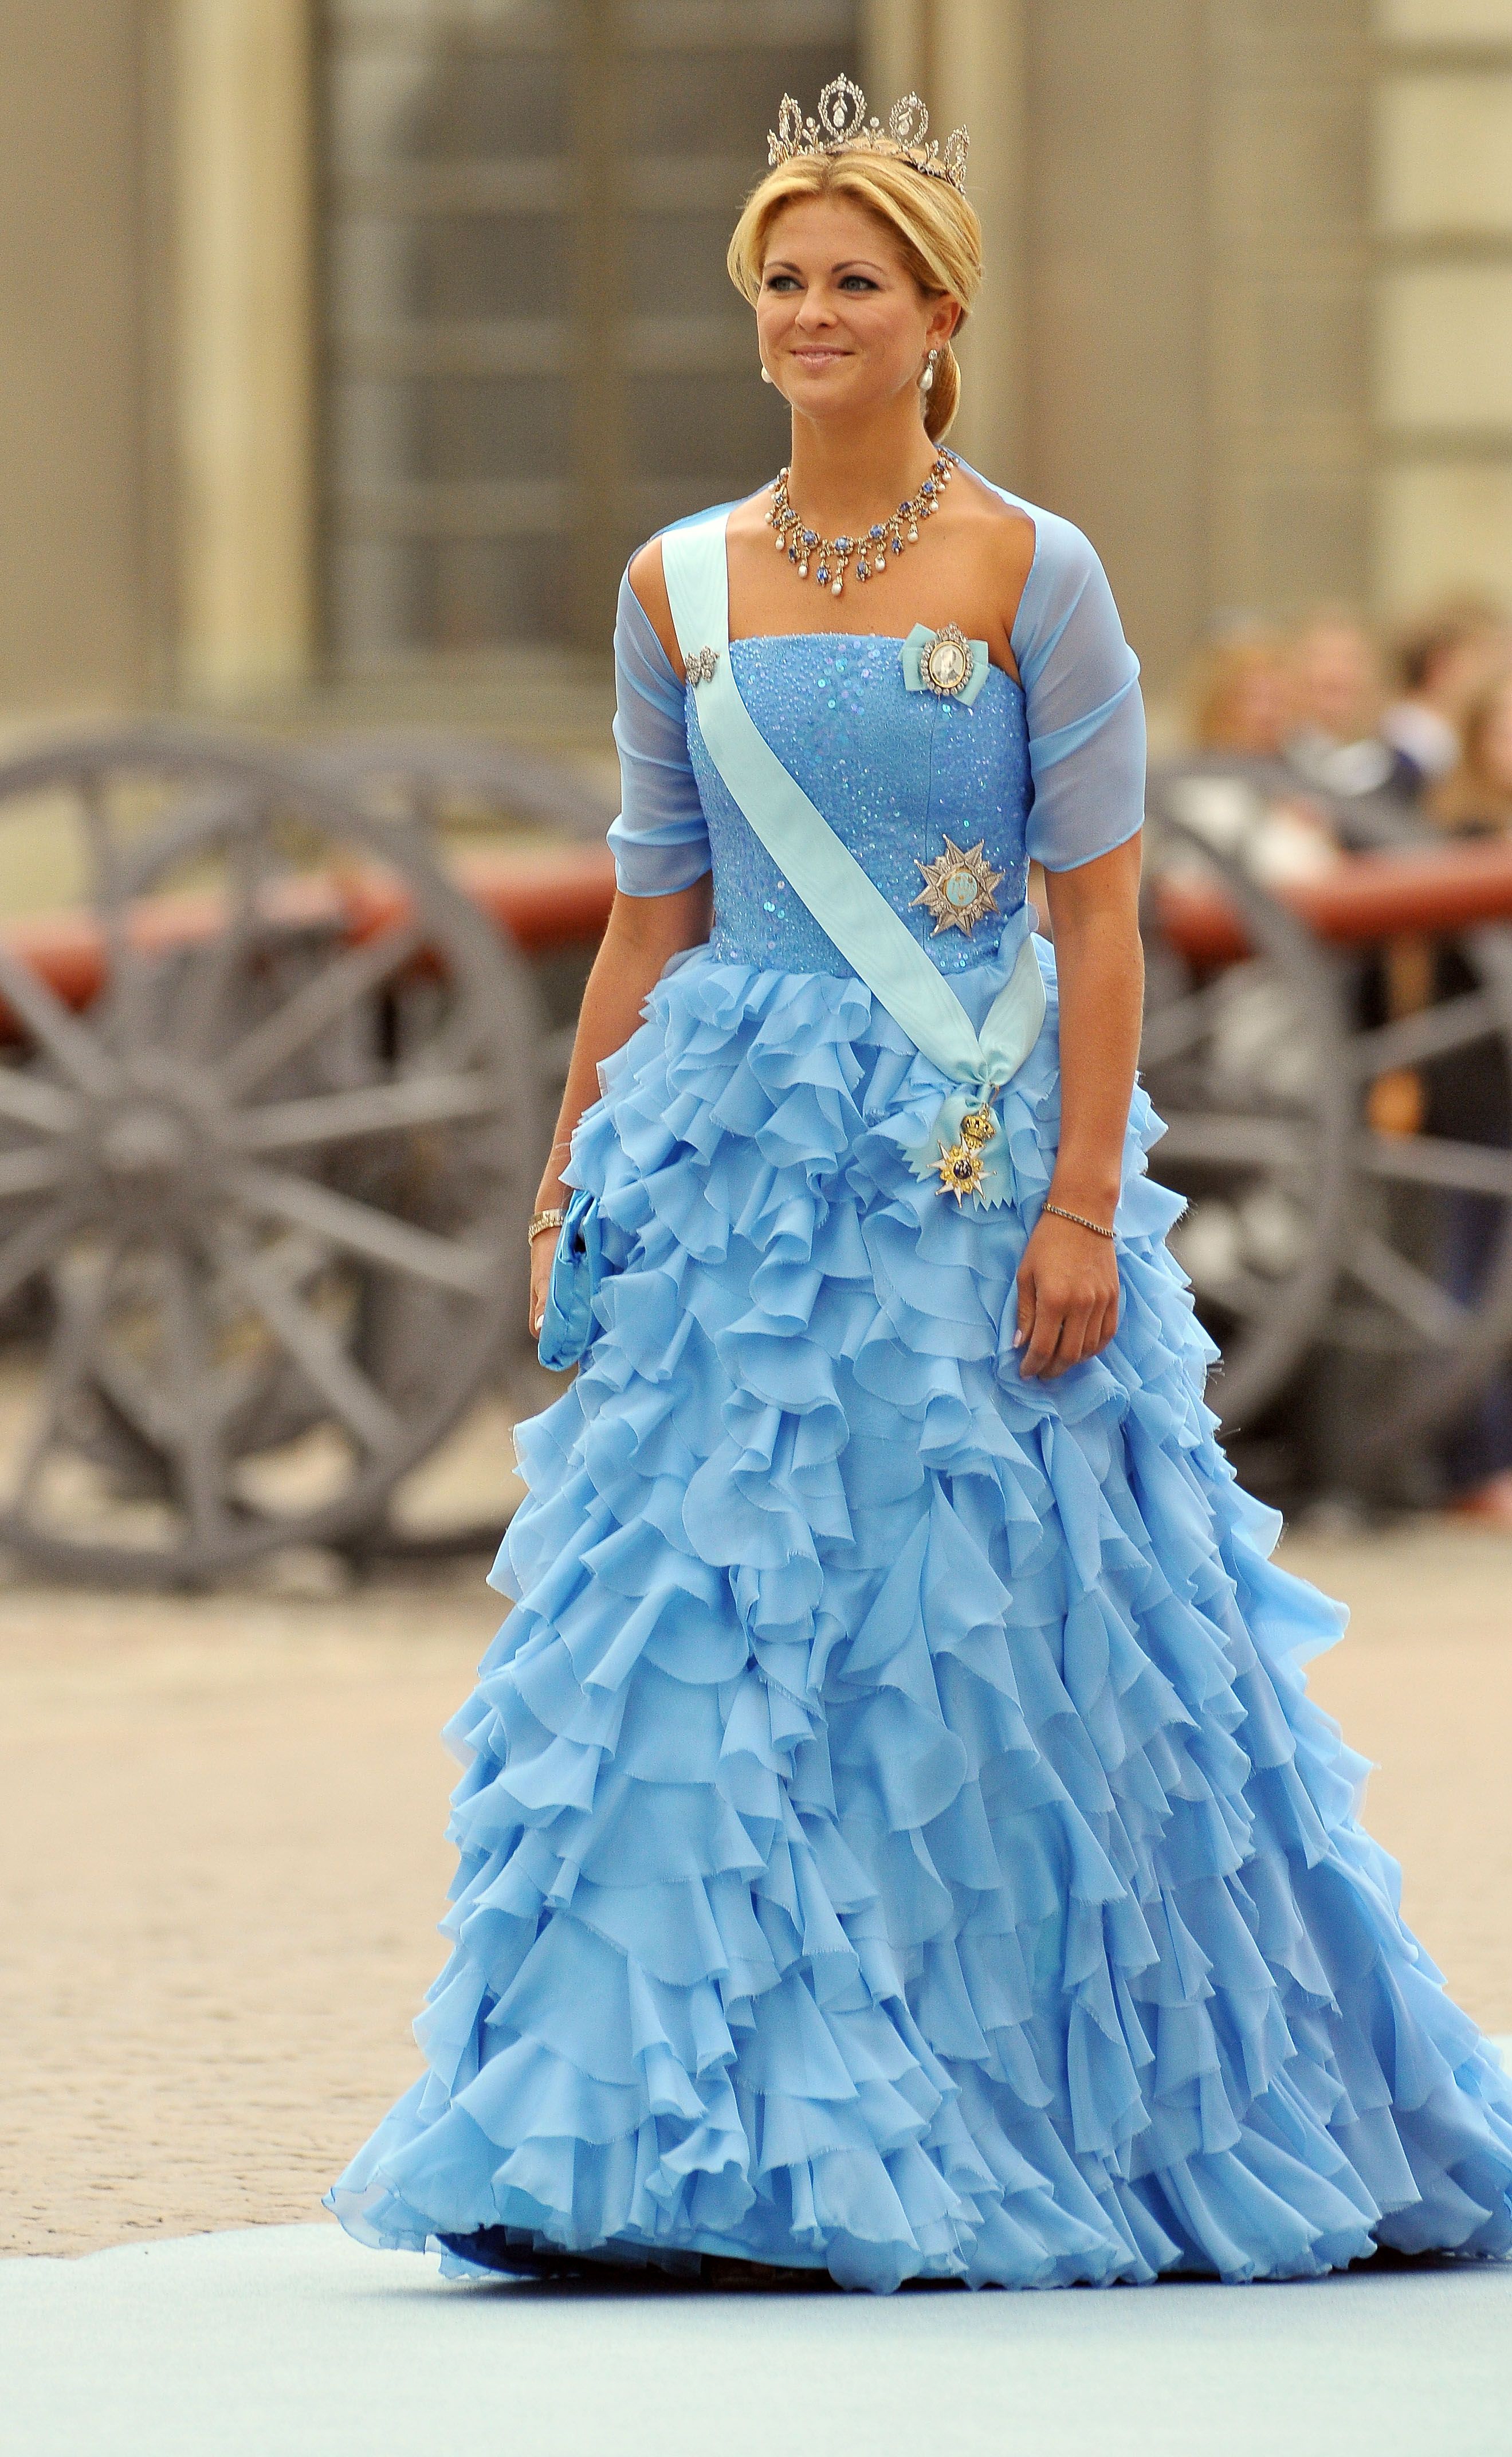 princess-madeleine-of-sweden-attends-the-wedding-of-crown-news-photo-1581111821.jpg